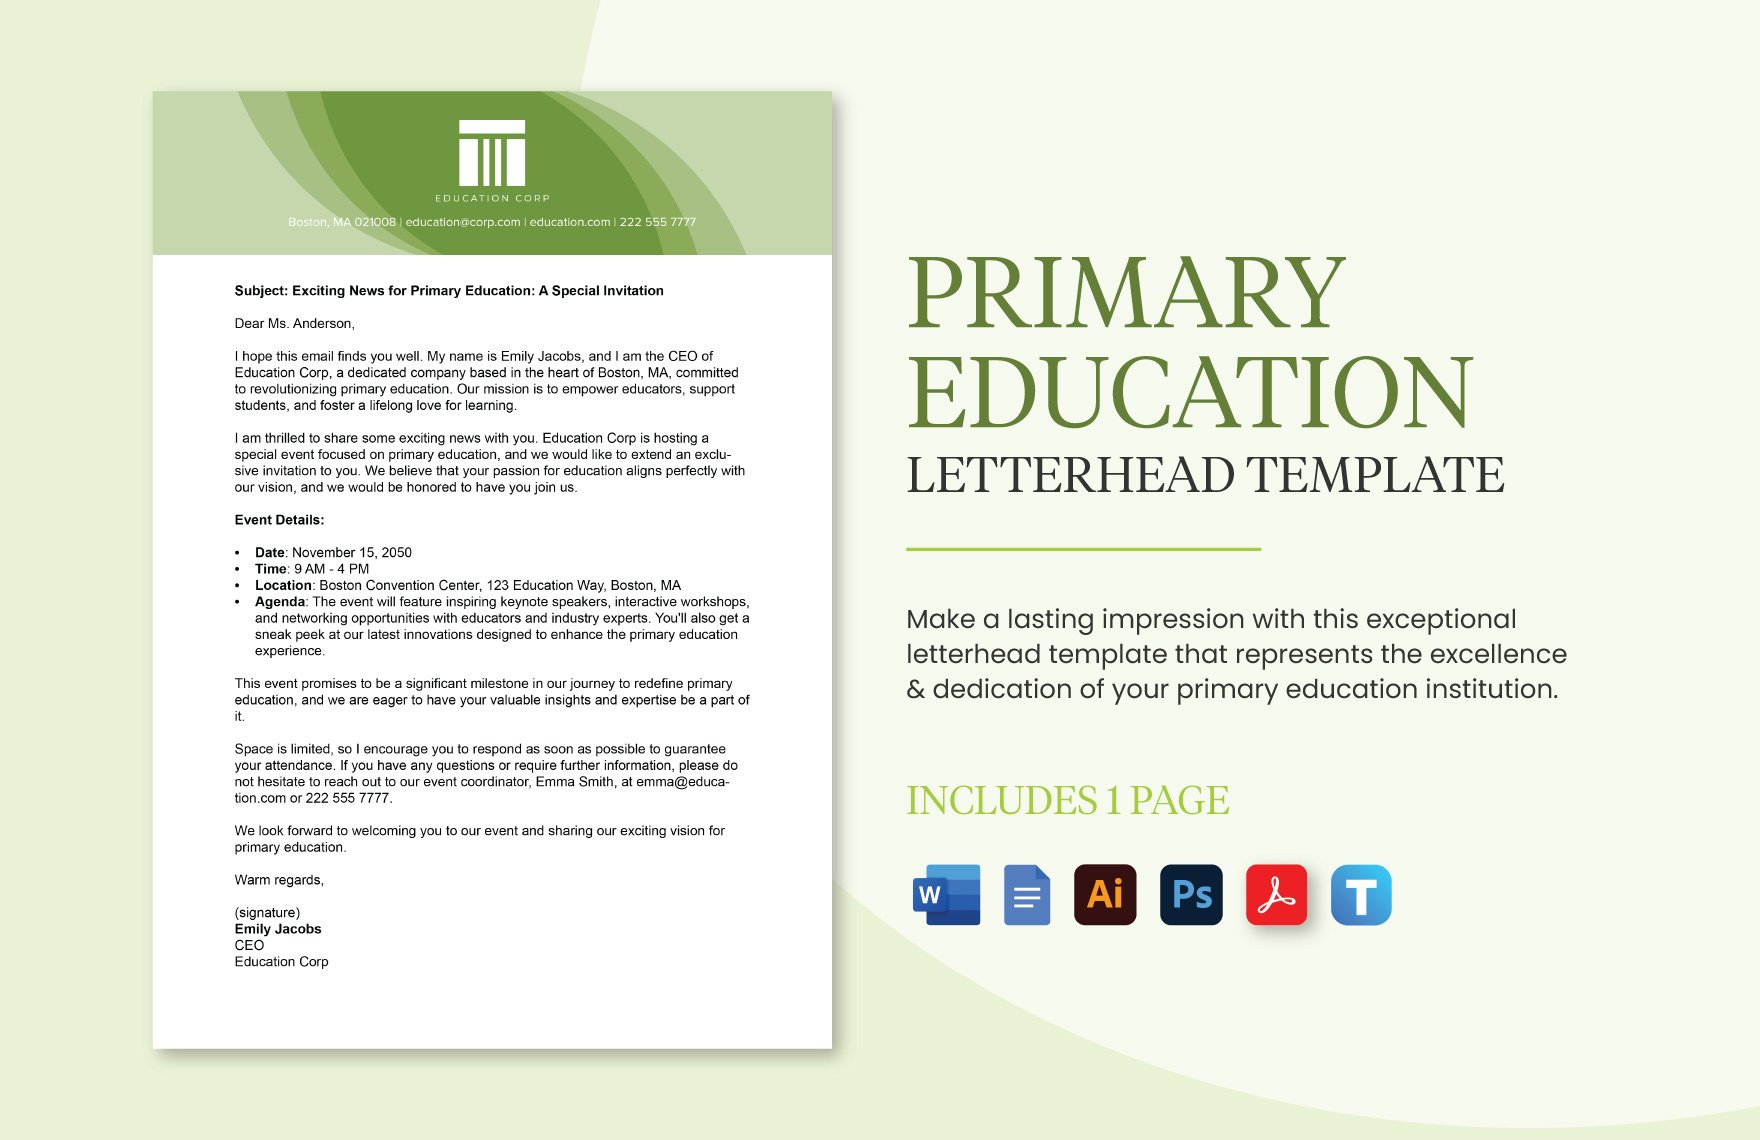 Primary Education Letterhead Template